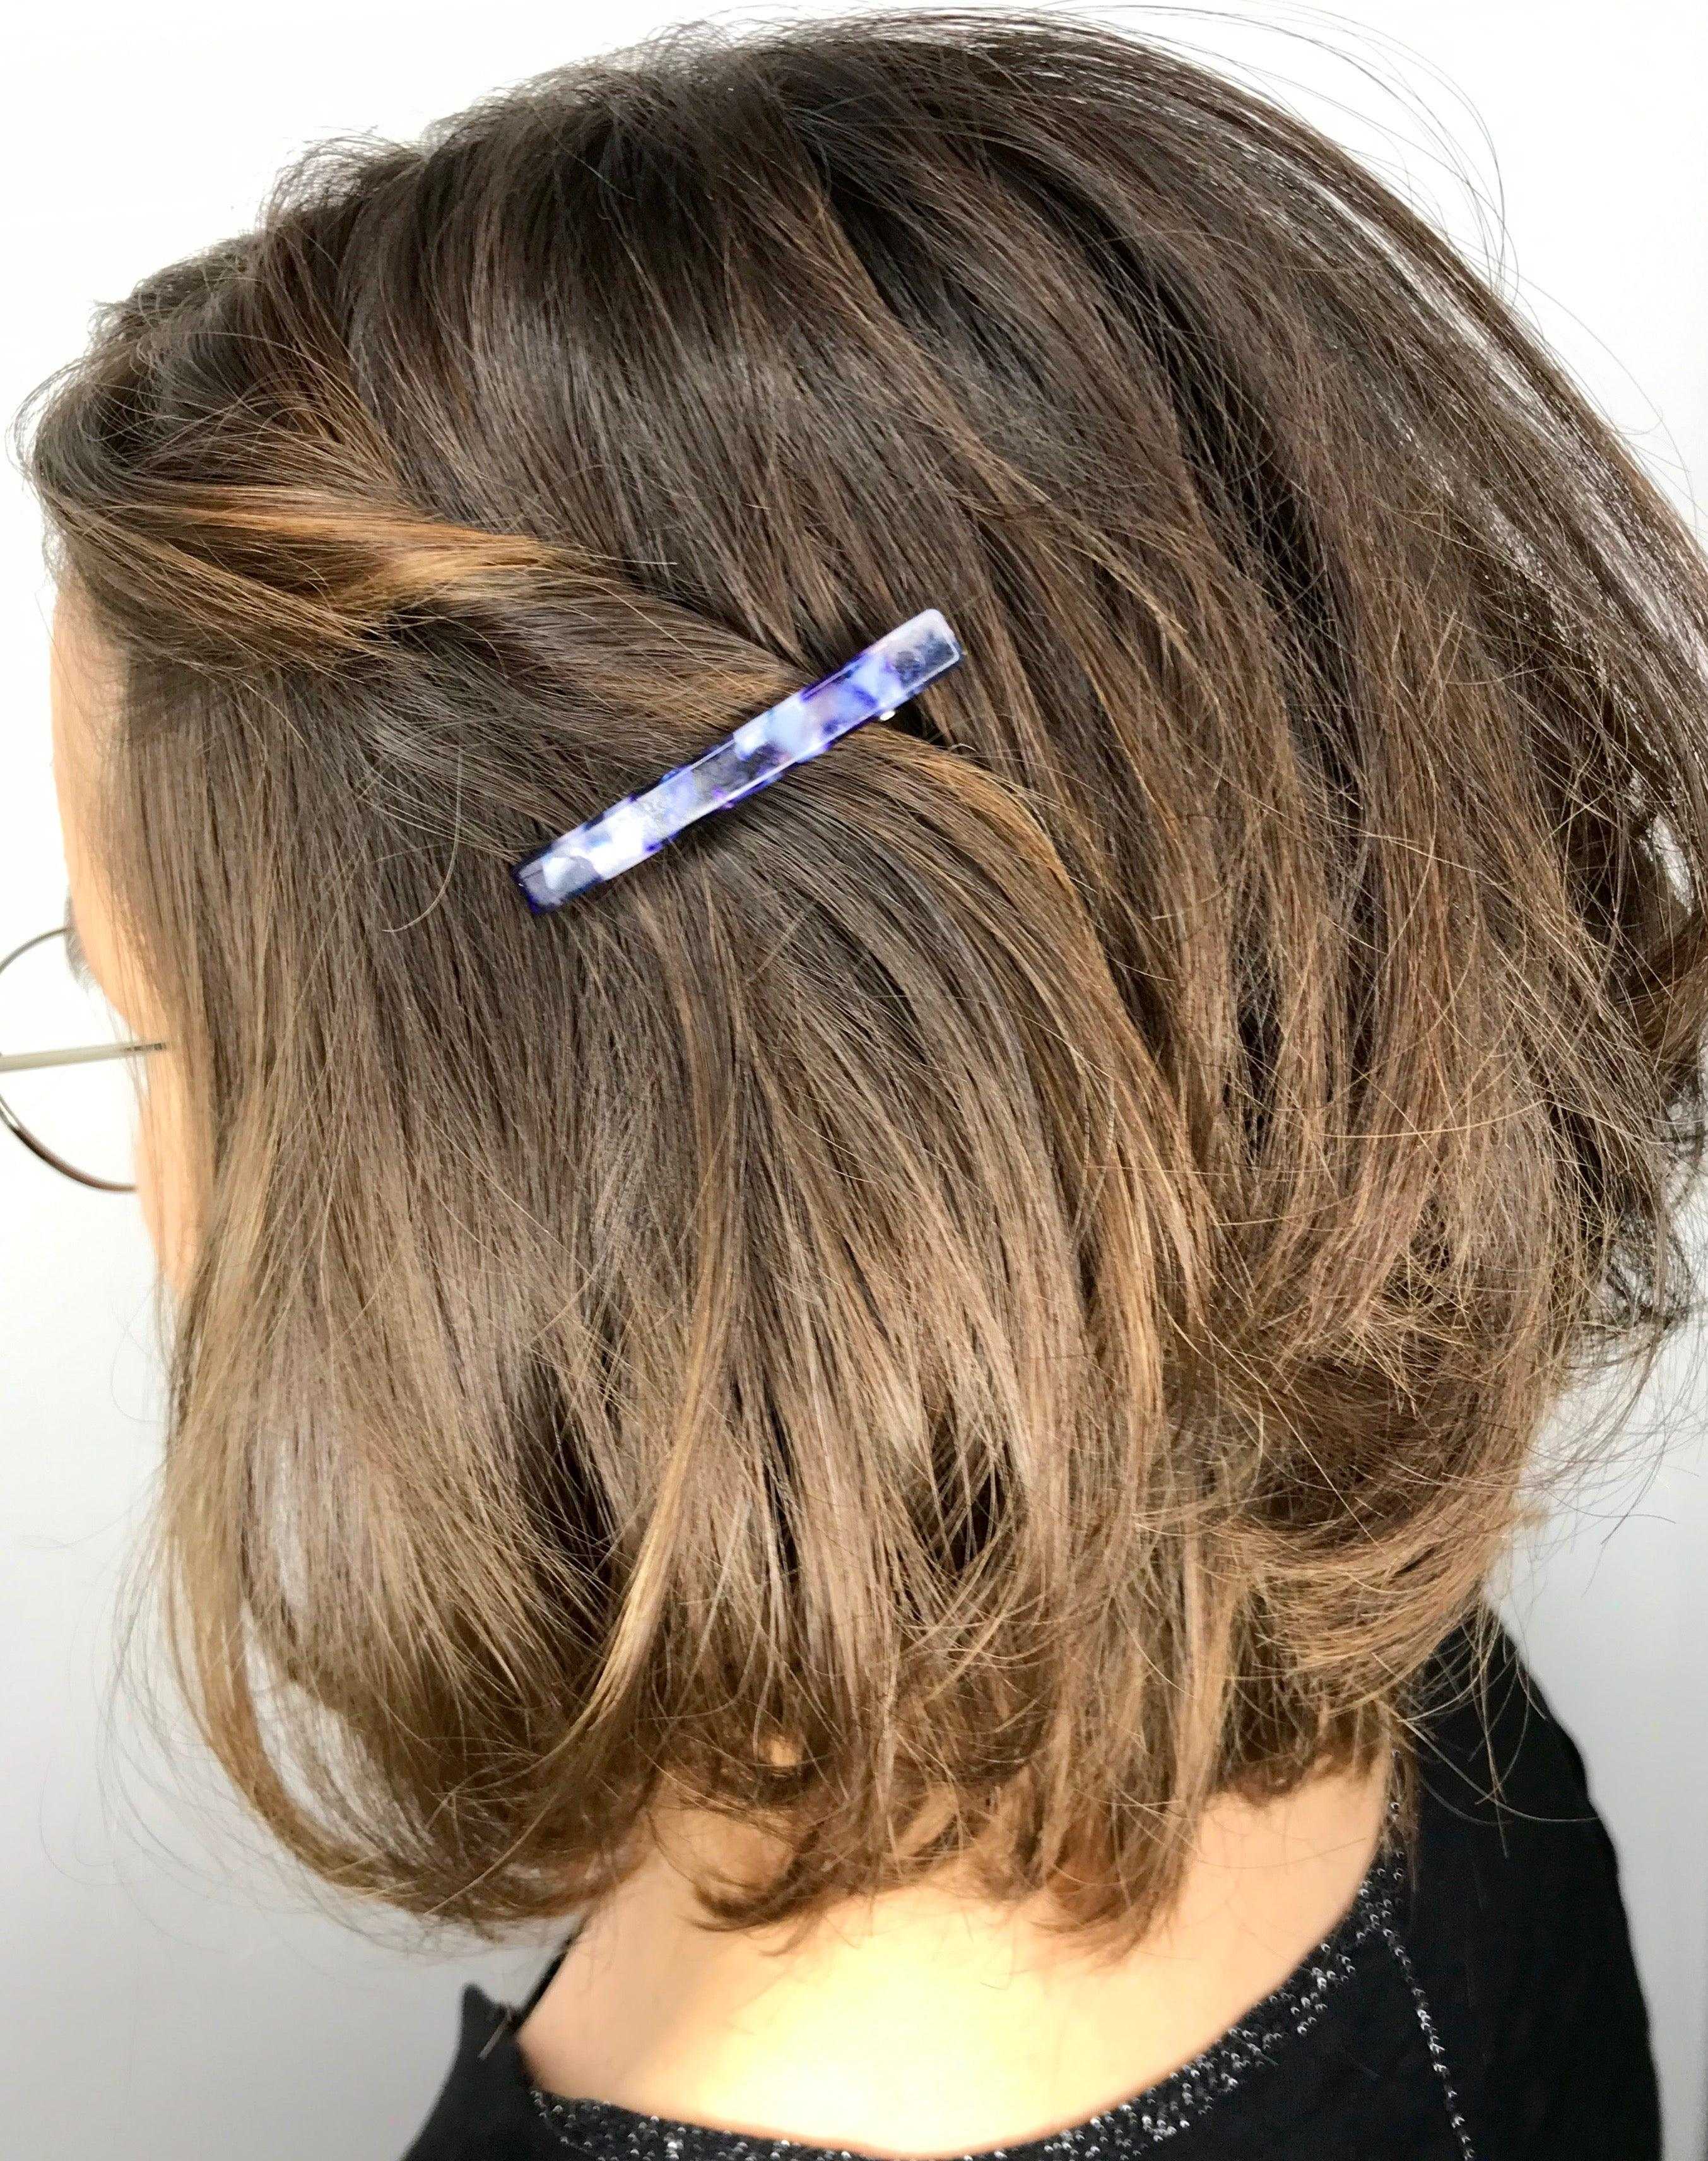 PIECES BY BONBON Louise hairclip dark blue Pieces by bonbon